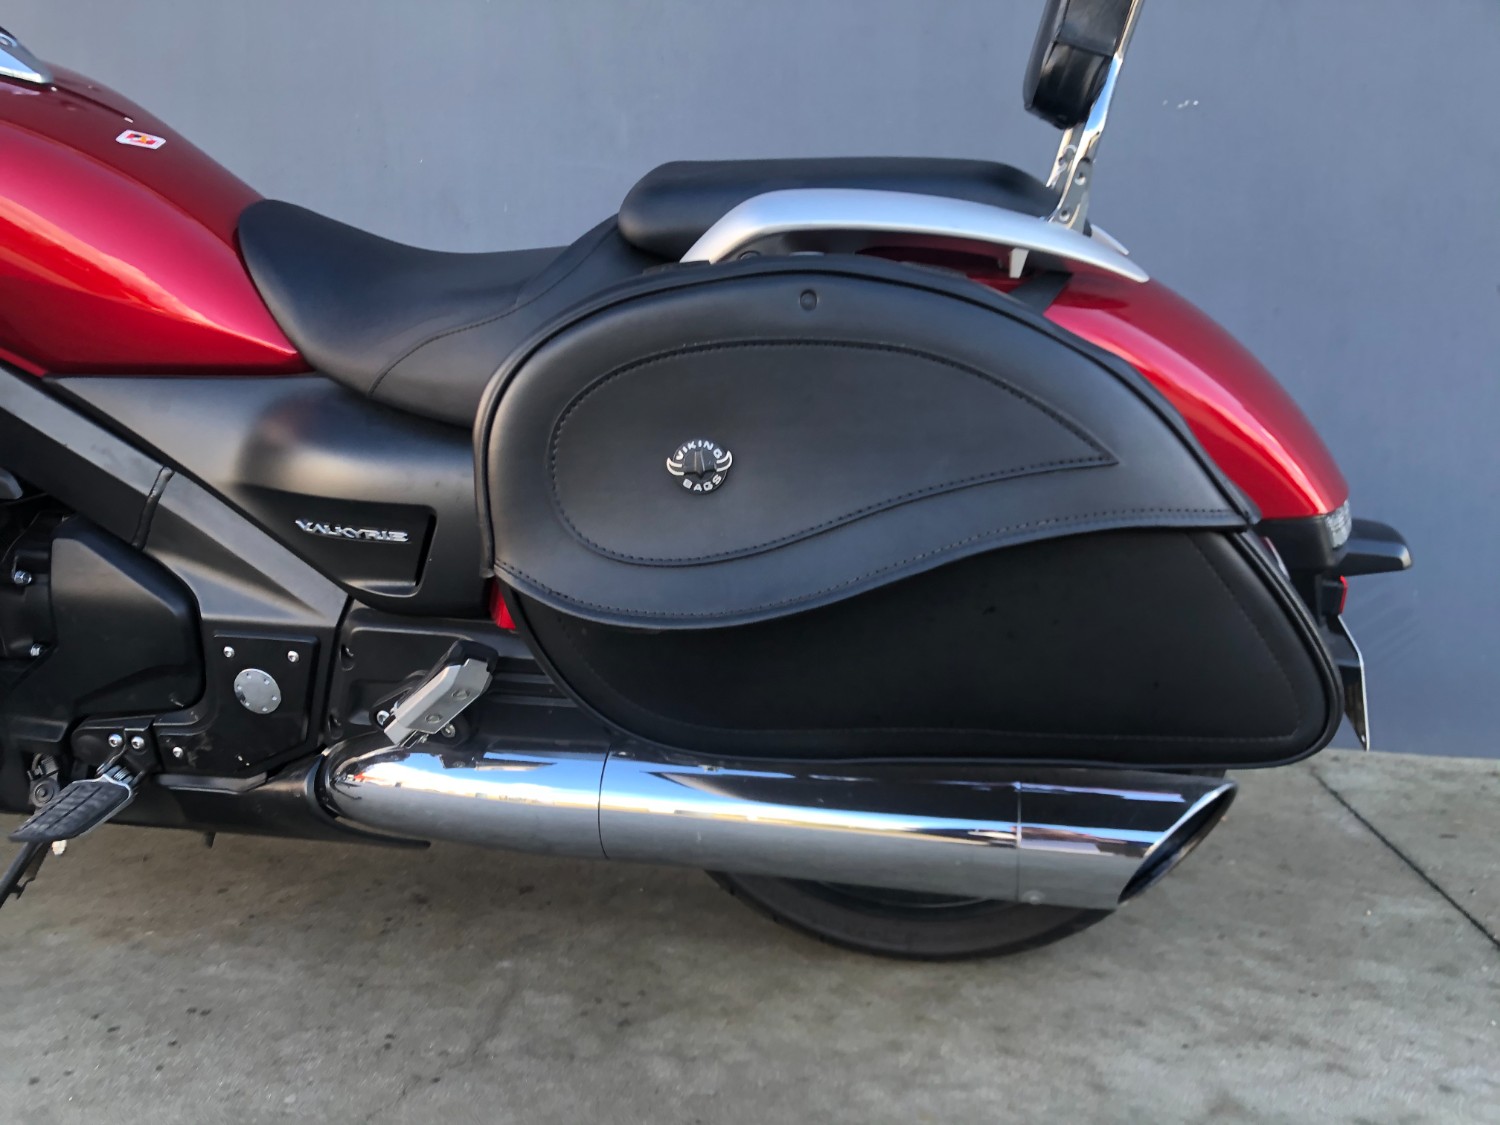 2015 Honda Valkyrie 1800cc GL1800C Motorcycle Image 22